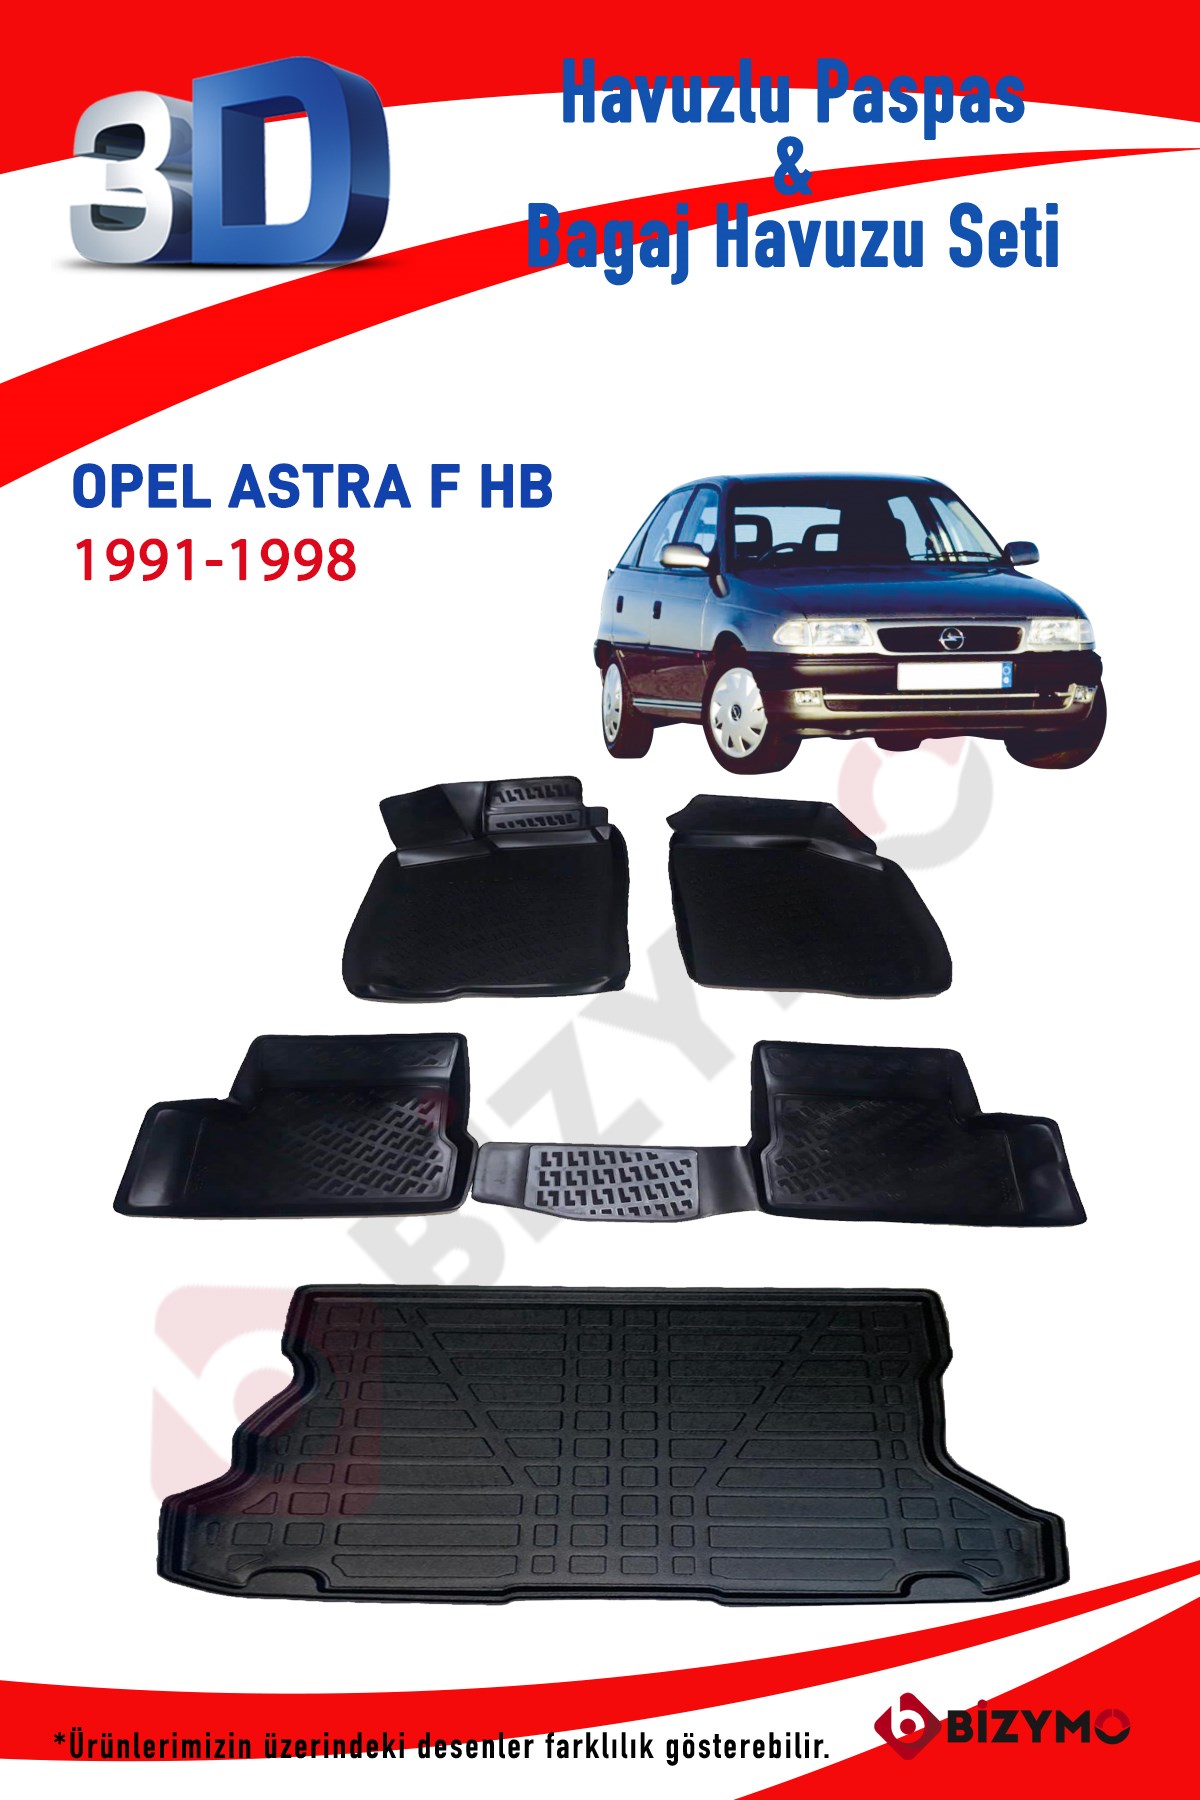 Opel Astra F HB 1991-1998 3D Paspas ve Bagaj Havuzu Seti Bizymo - Bizim Oto